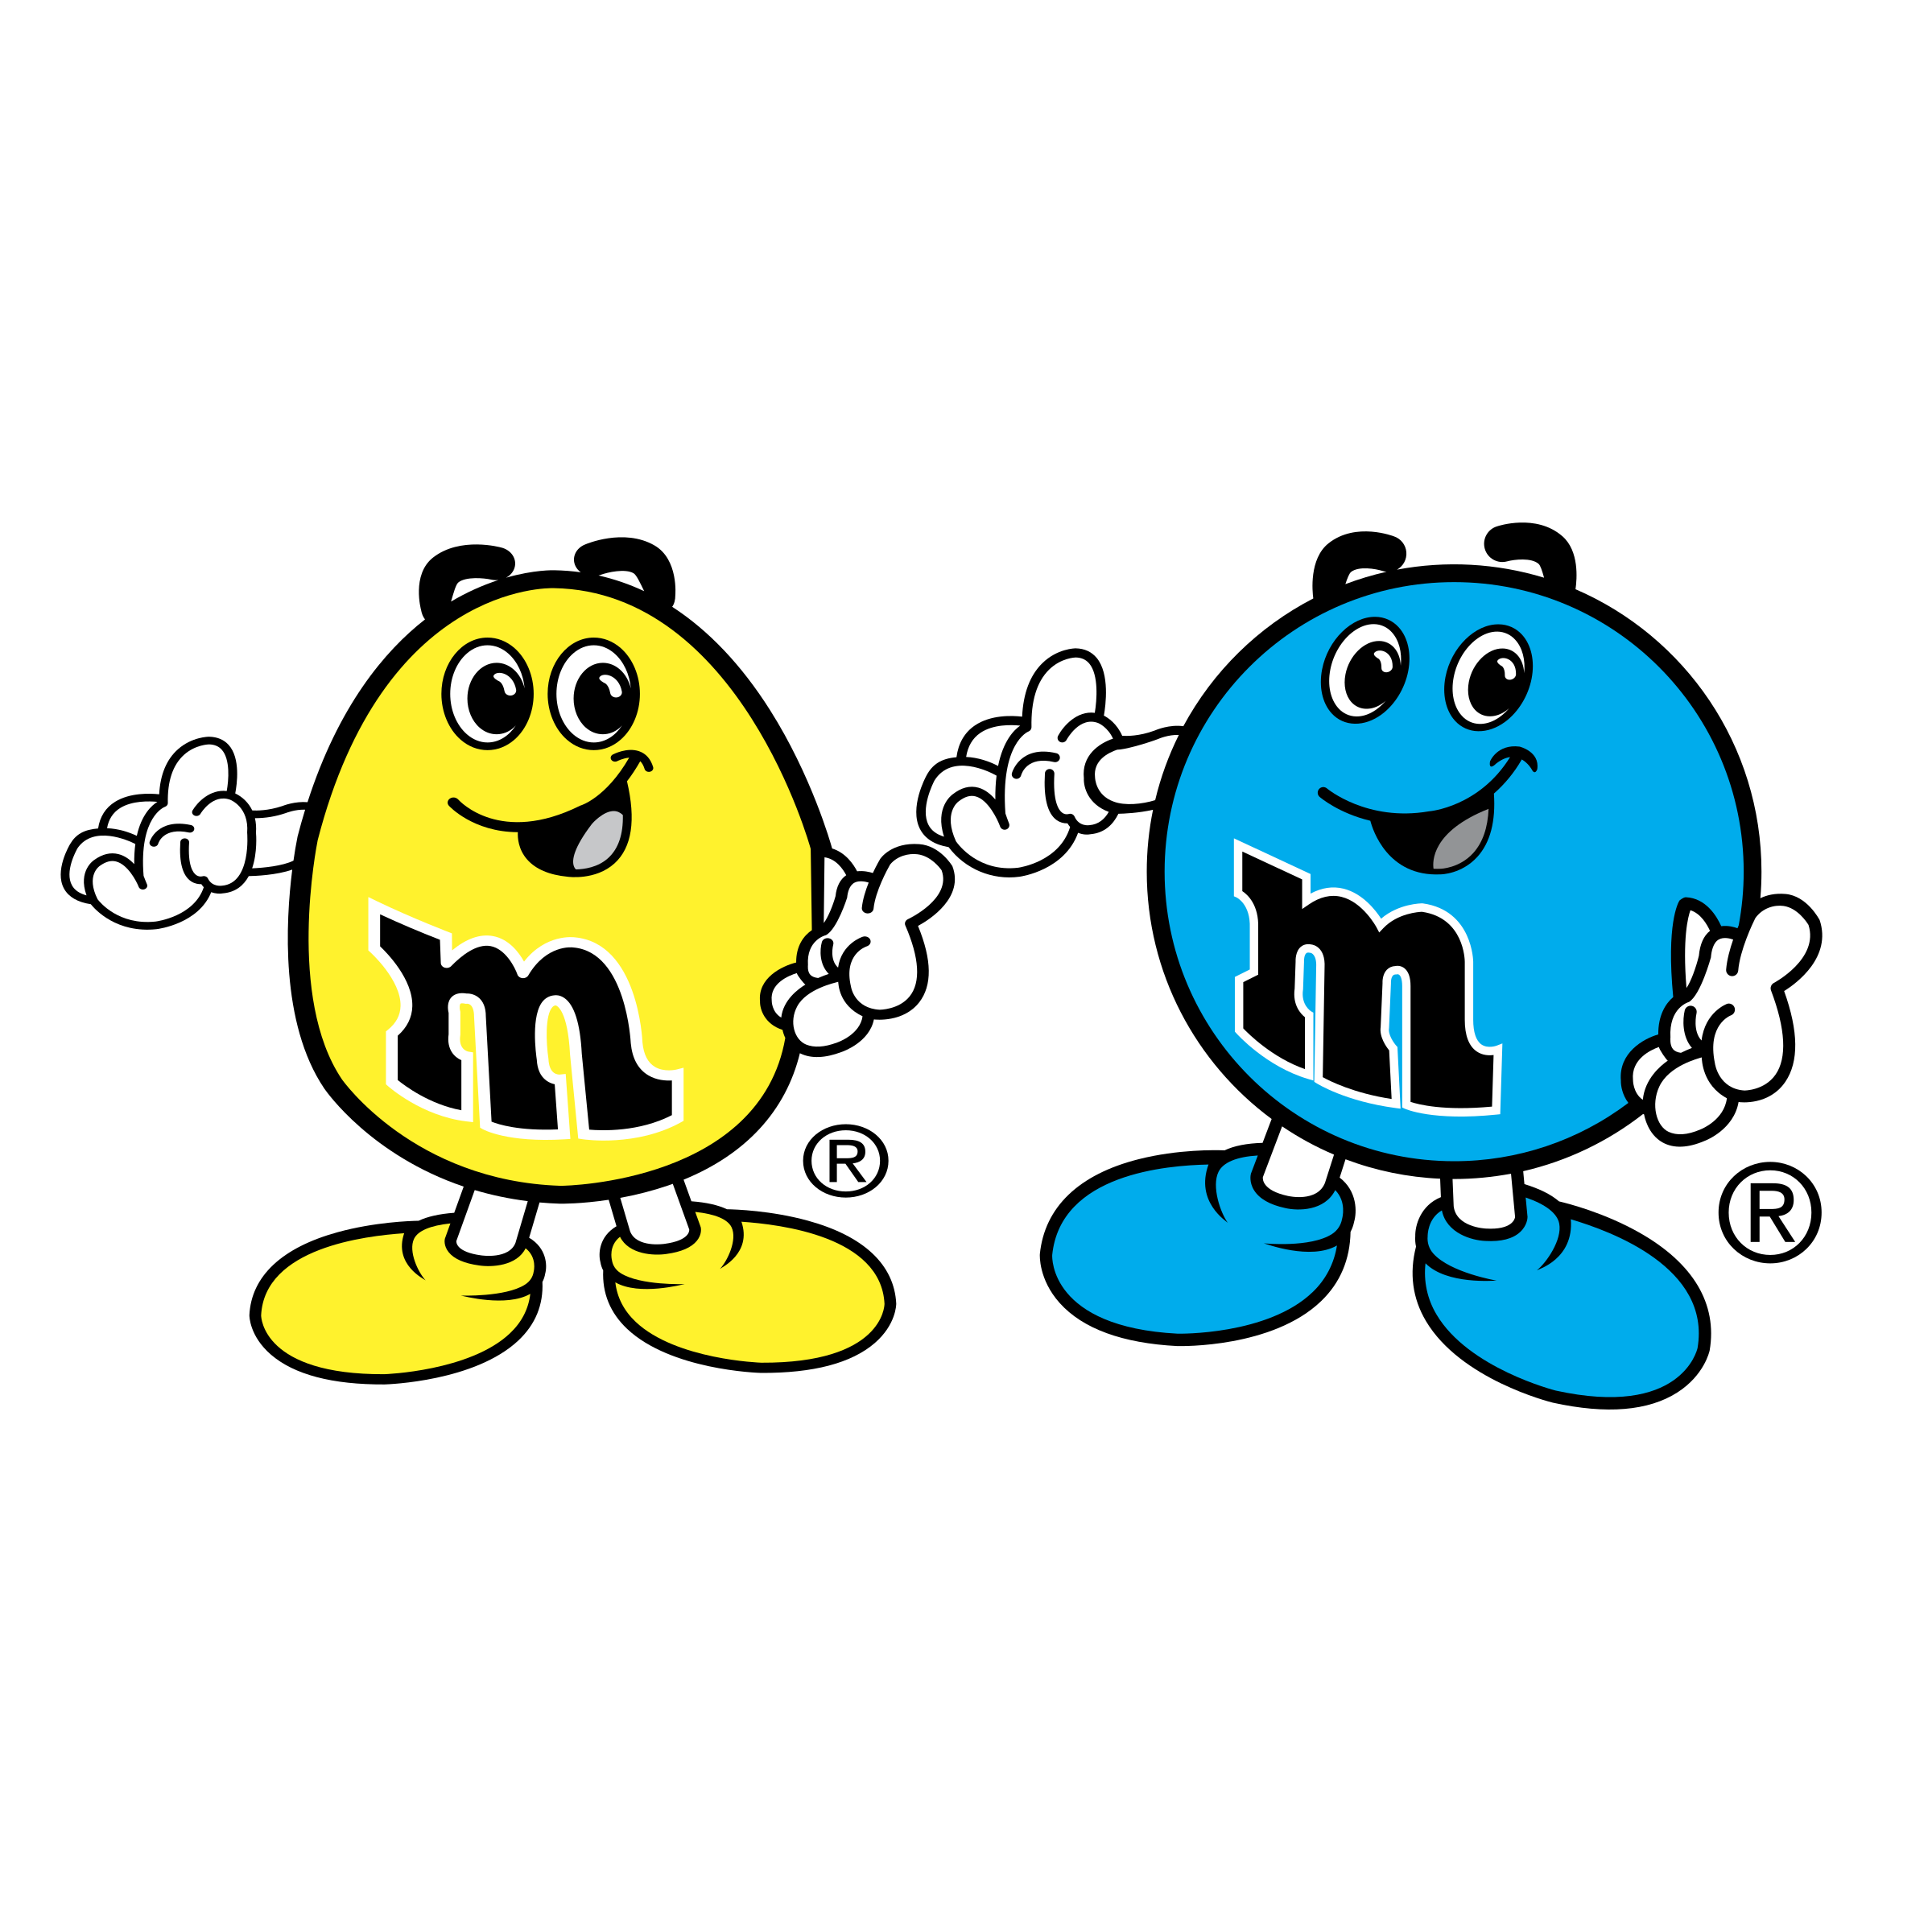 M＆M'sチョコレート